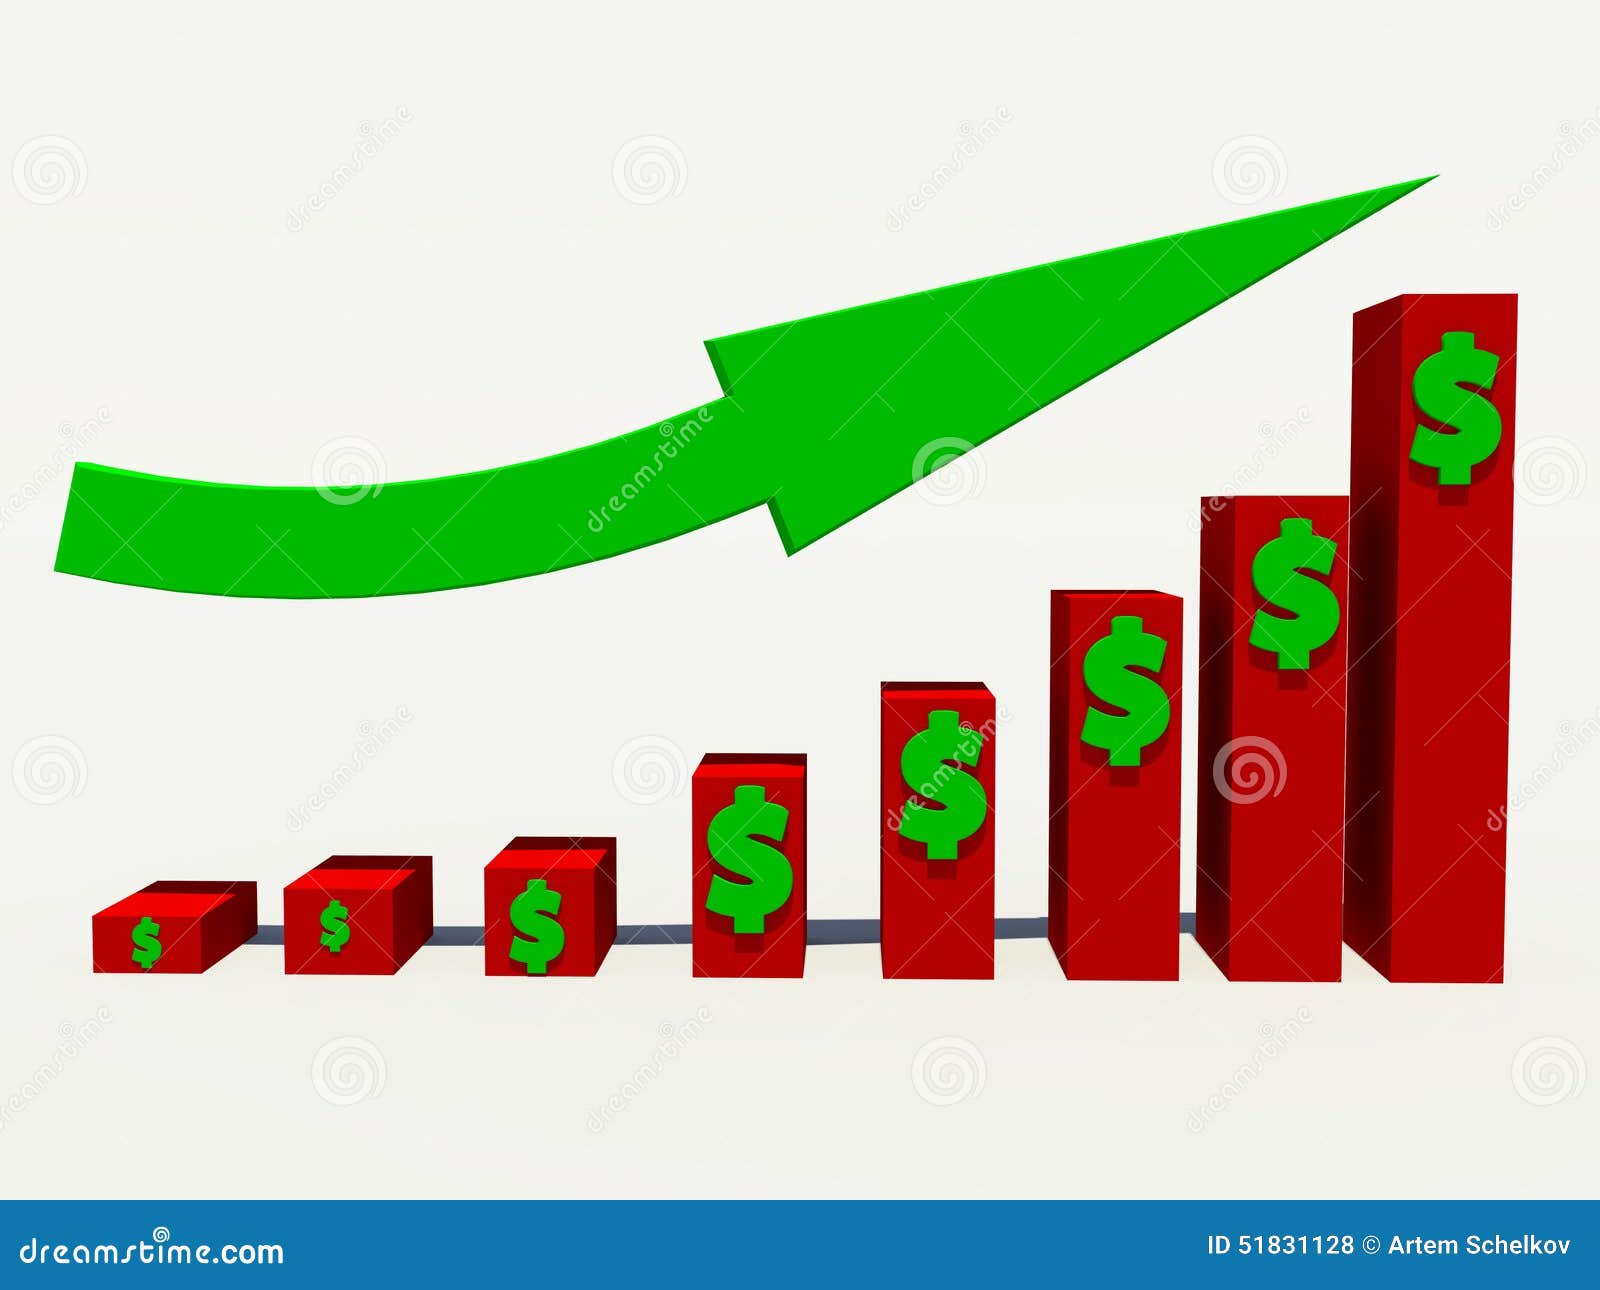  Increase  revenue  stock illustration Illustration of 